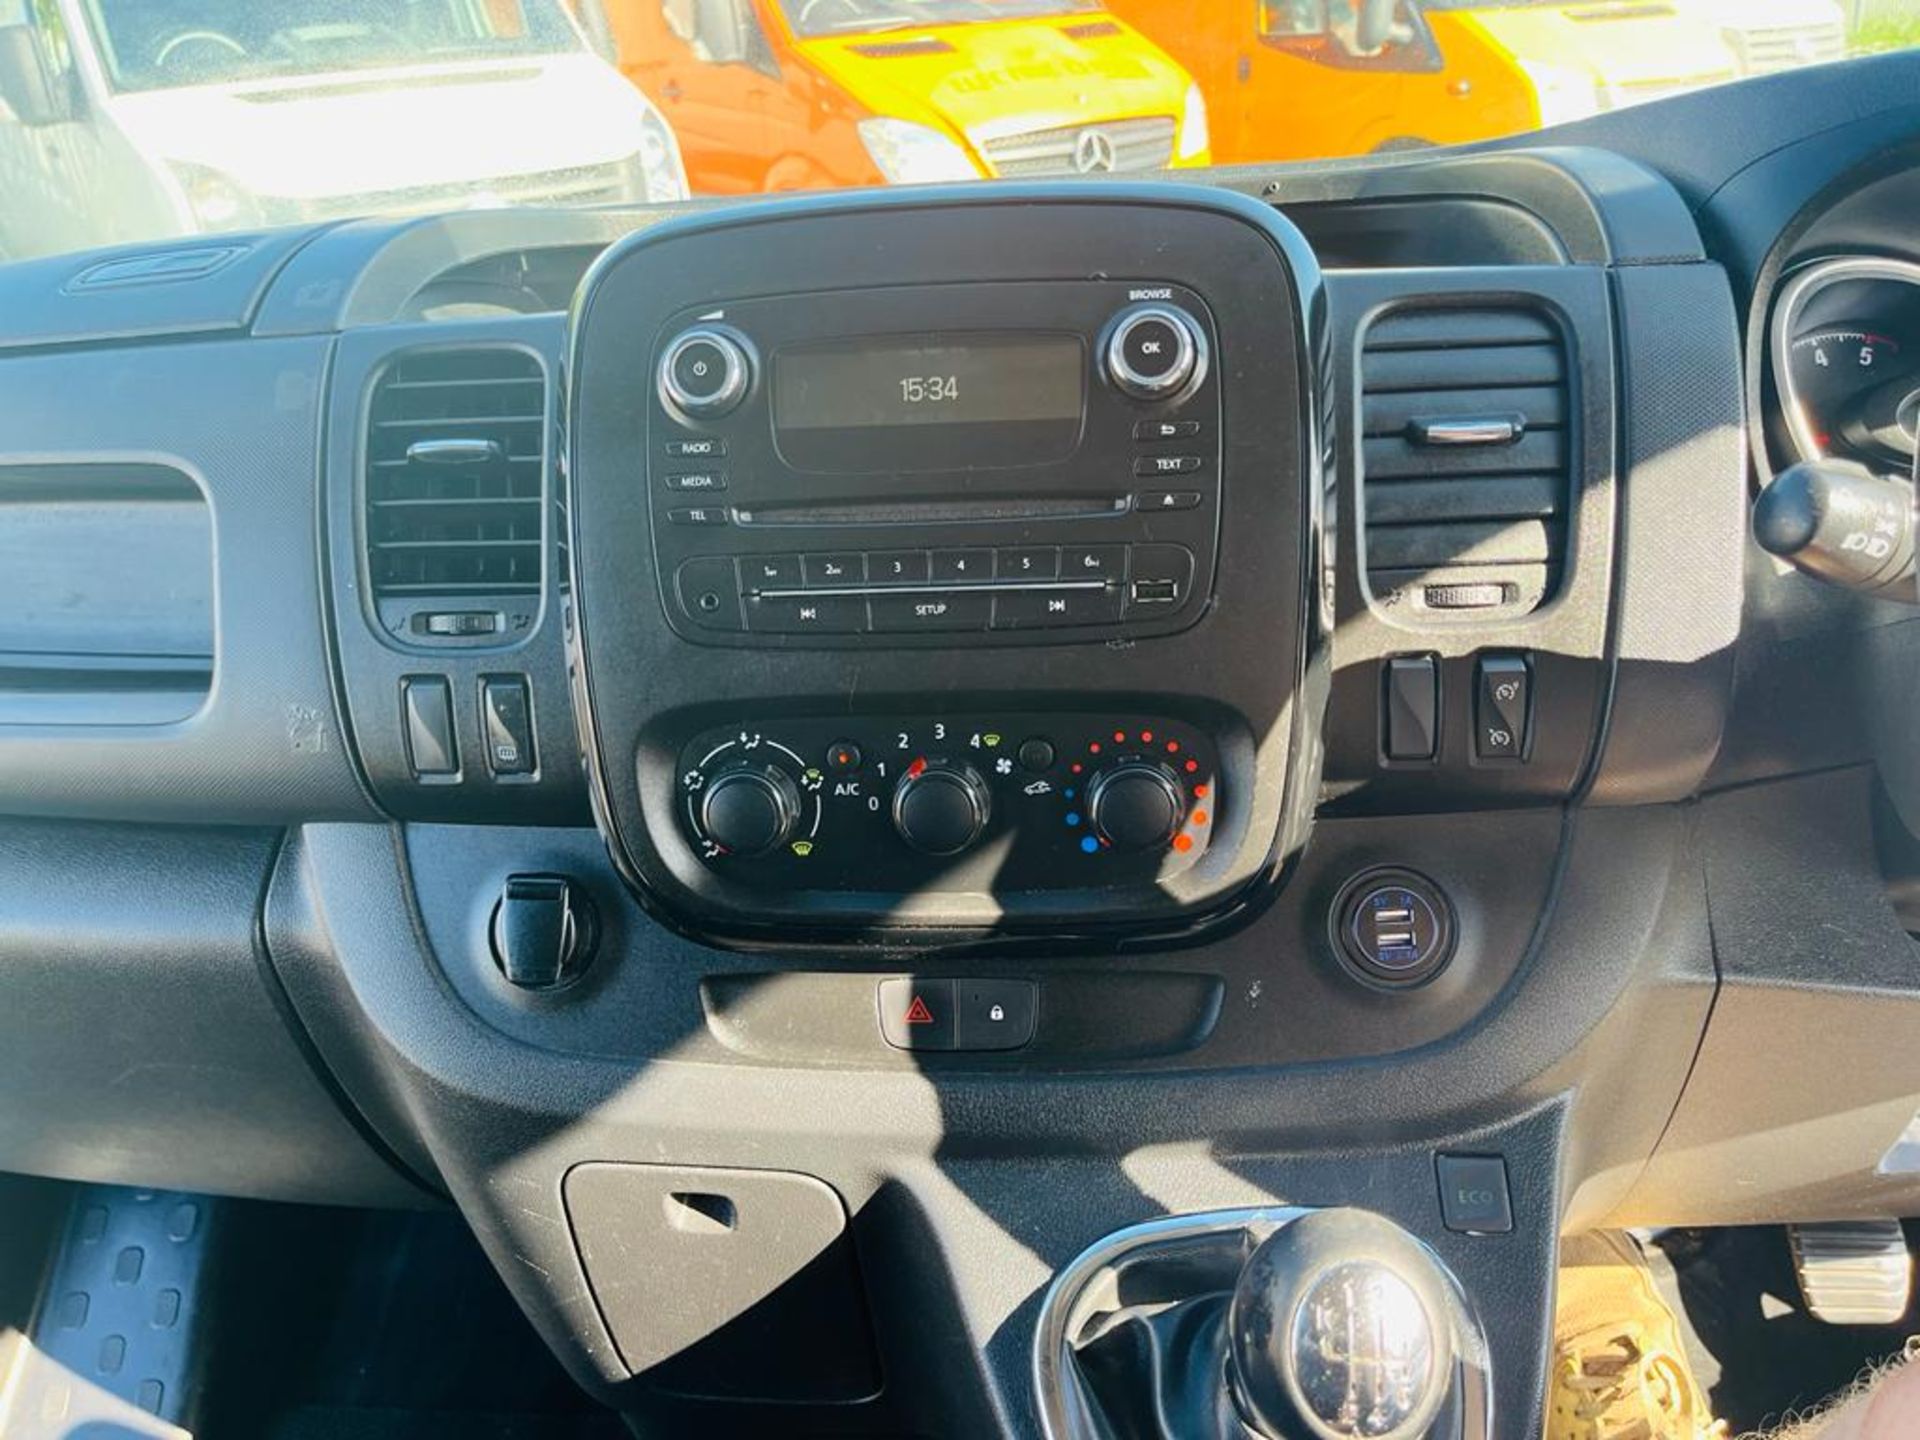 ** ON SALE ** Vauxhall Vivaro Sportive 1.6 CDTI 120 L1 H1 2018 '18 Reg' A/C - Panel van - Image 21 of 27